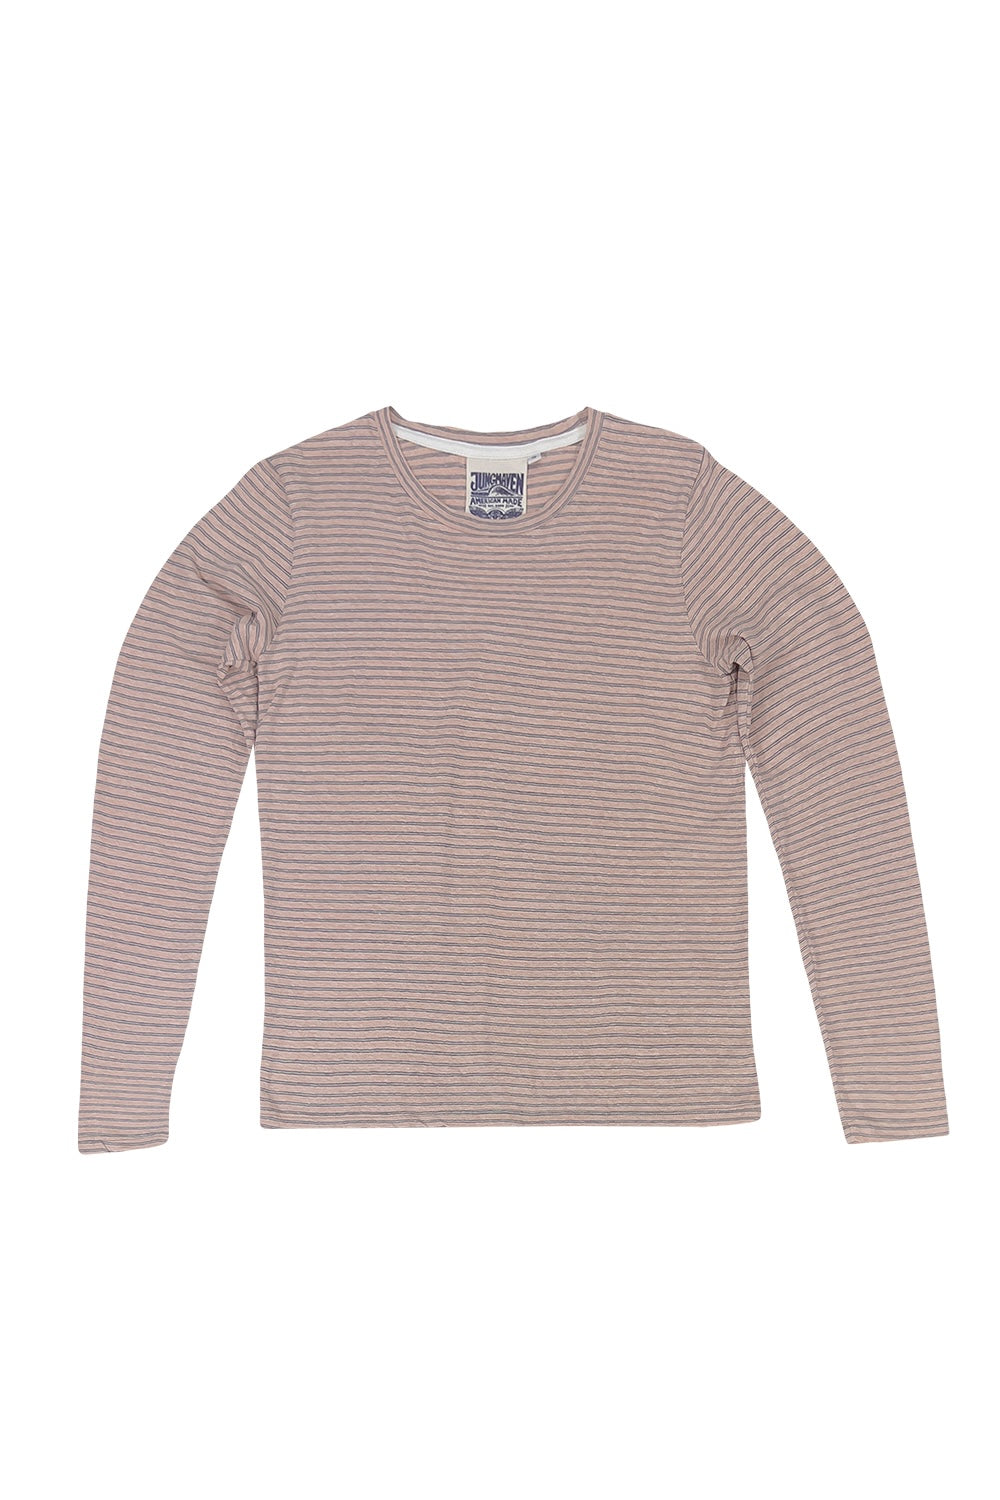 Stripe Encanto Long Sleeve Tee | Jungmaven Hemp Clothing & Accessories / Color:  Pink/Blue/Canvas Thin Stripe